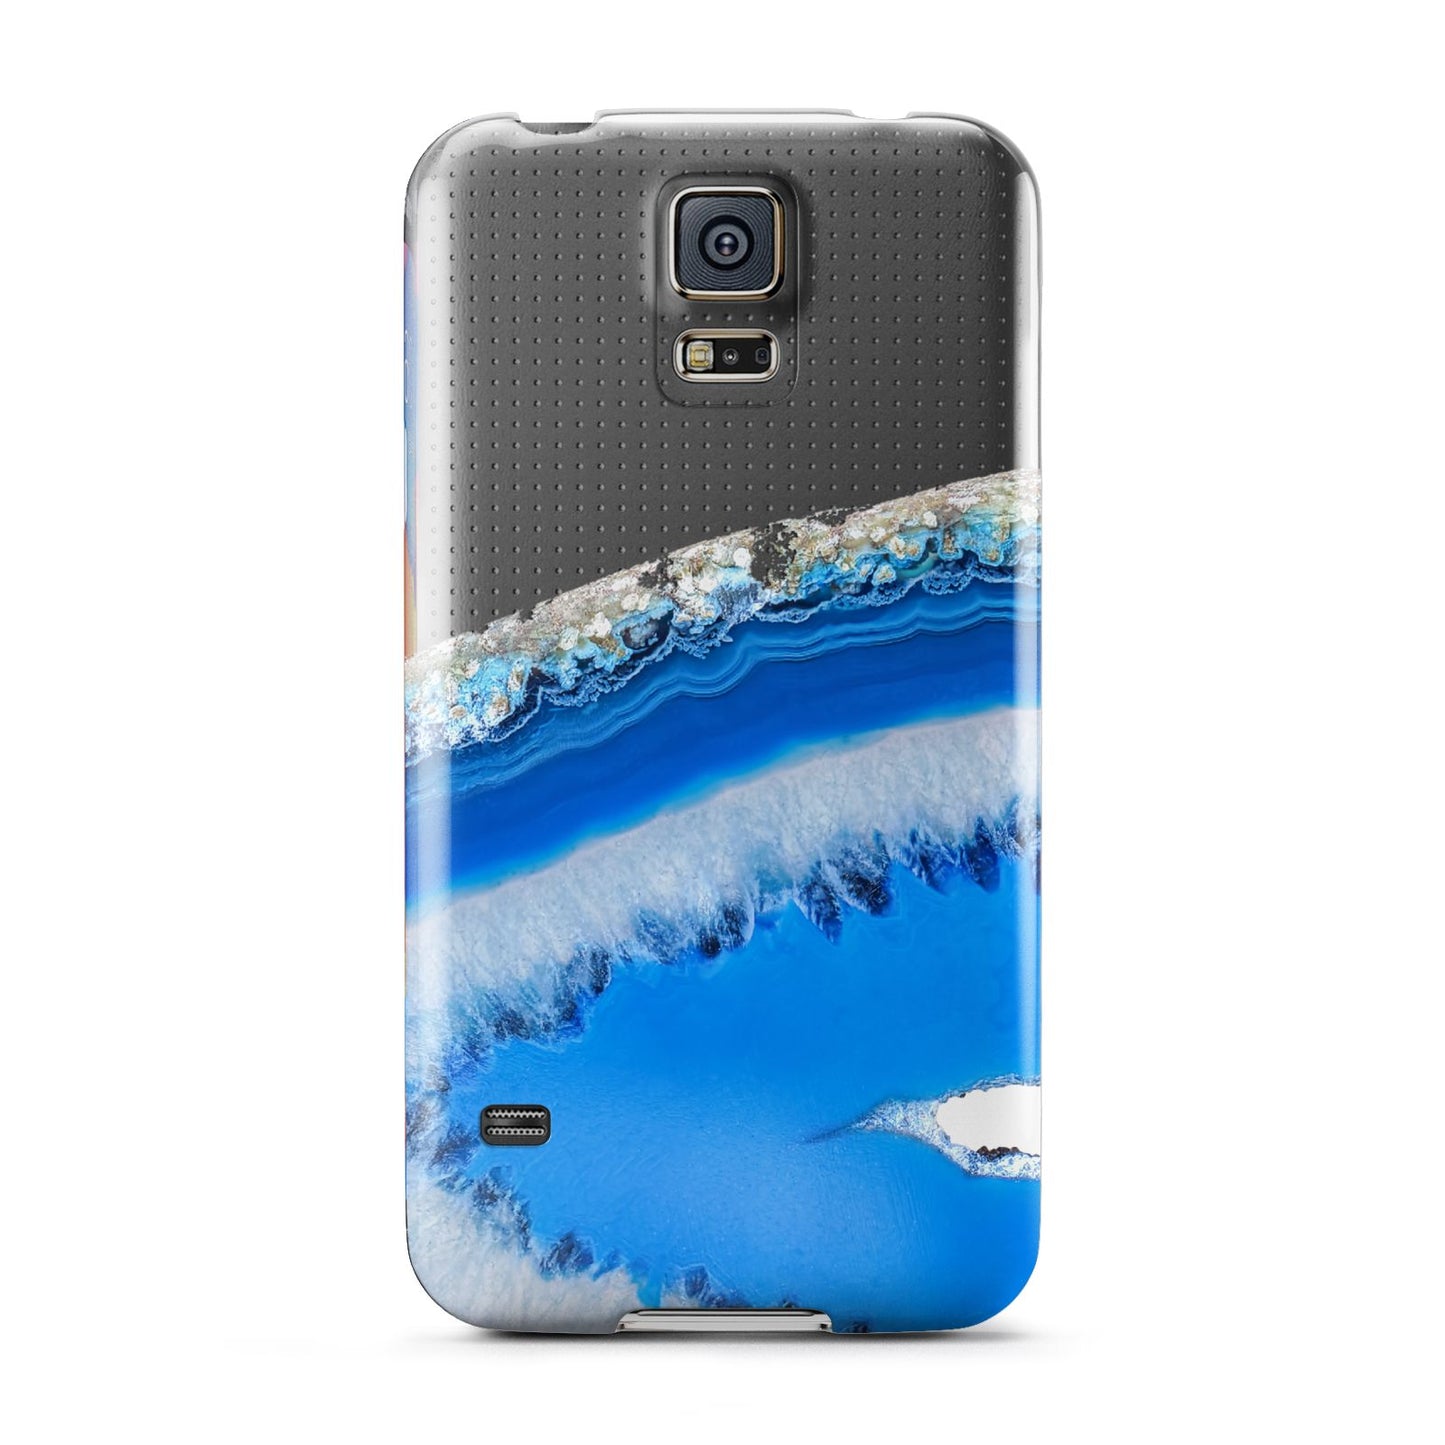 Agate Blue Samsung Galaxy S5 Case